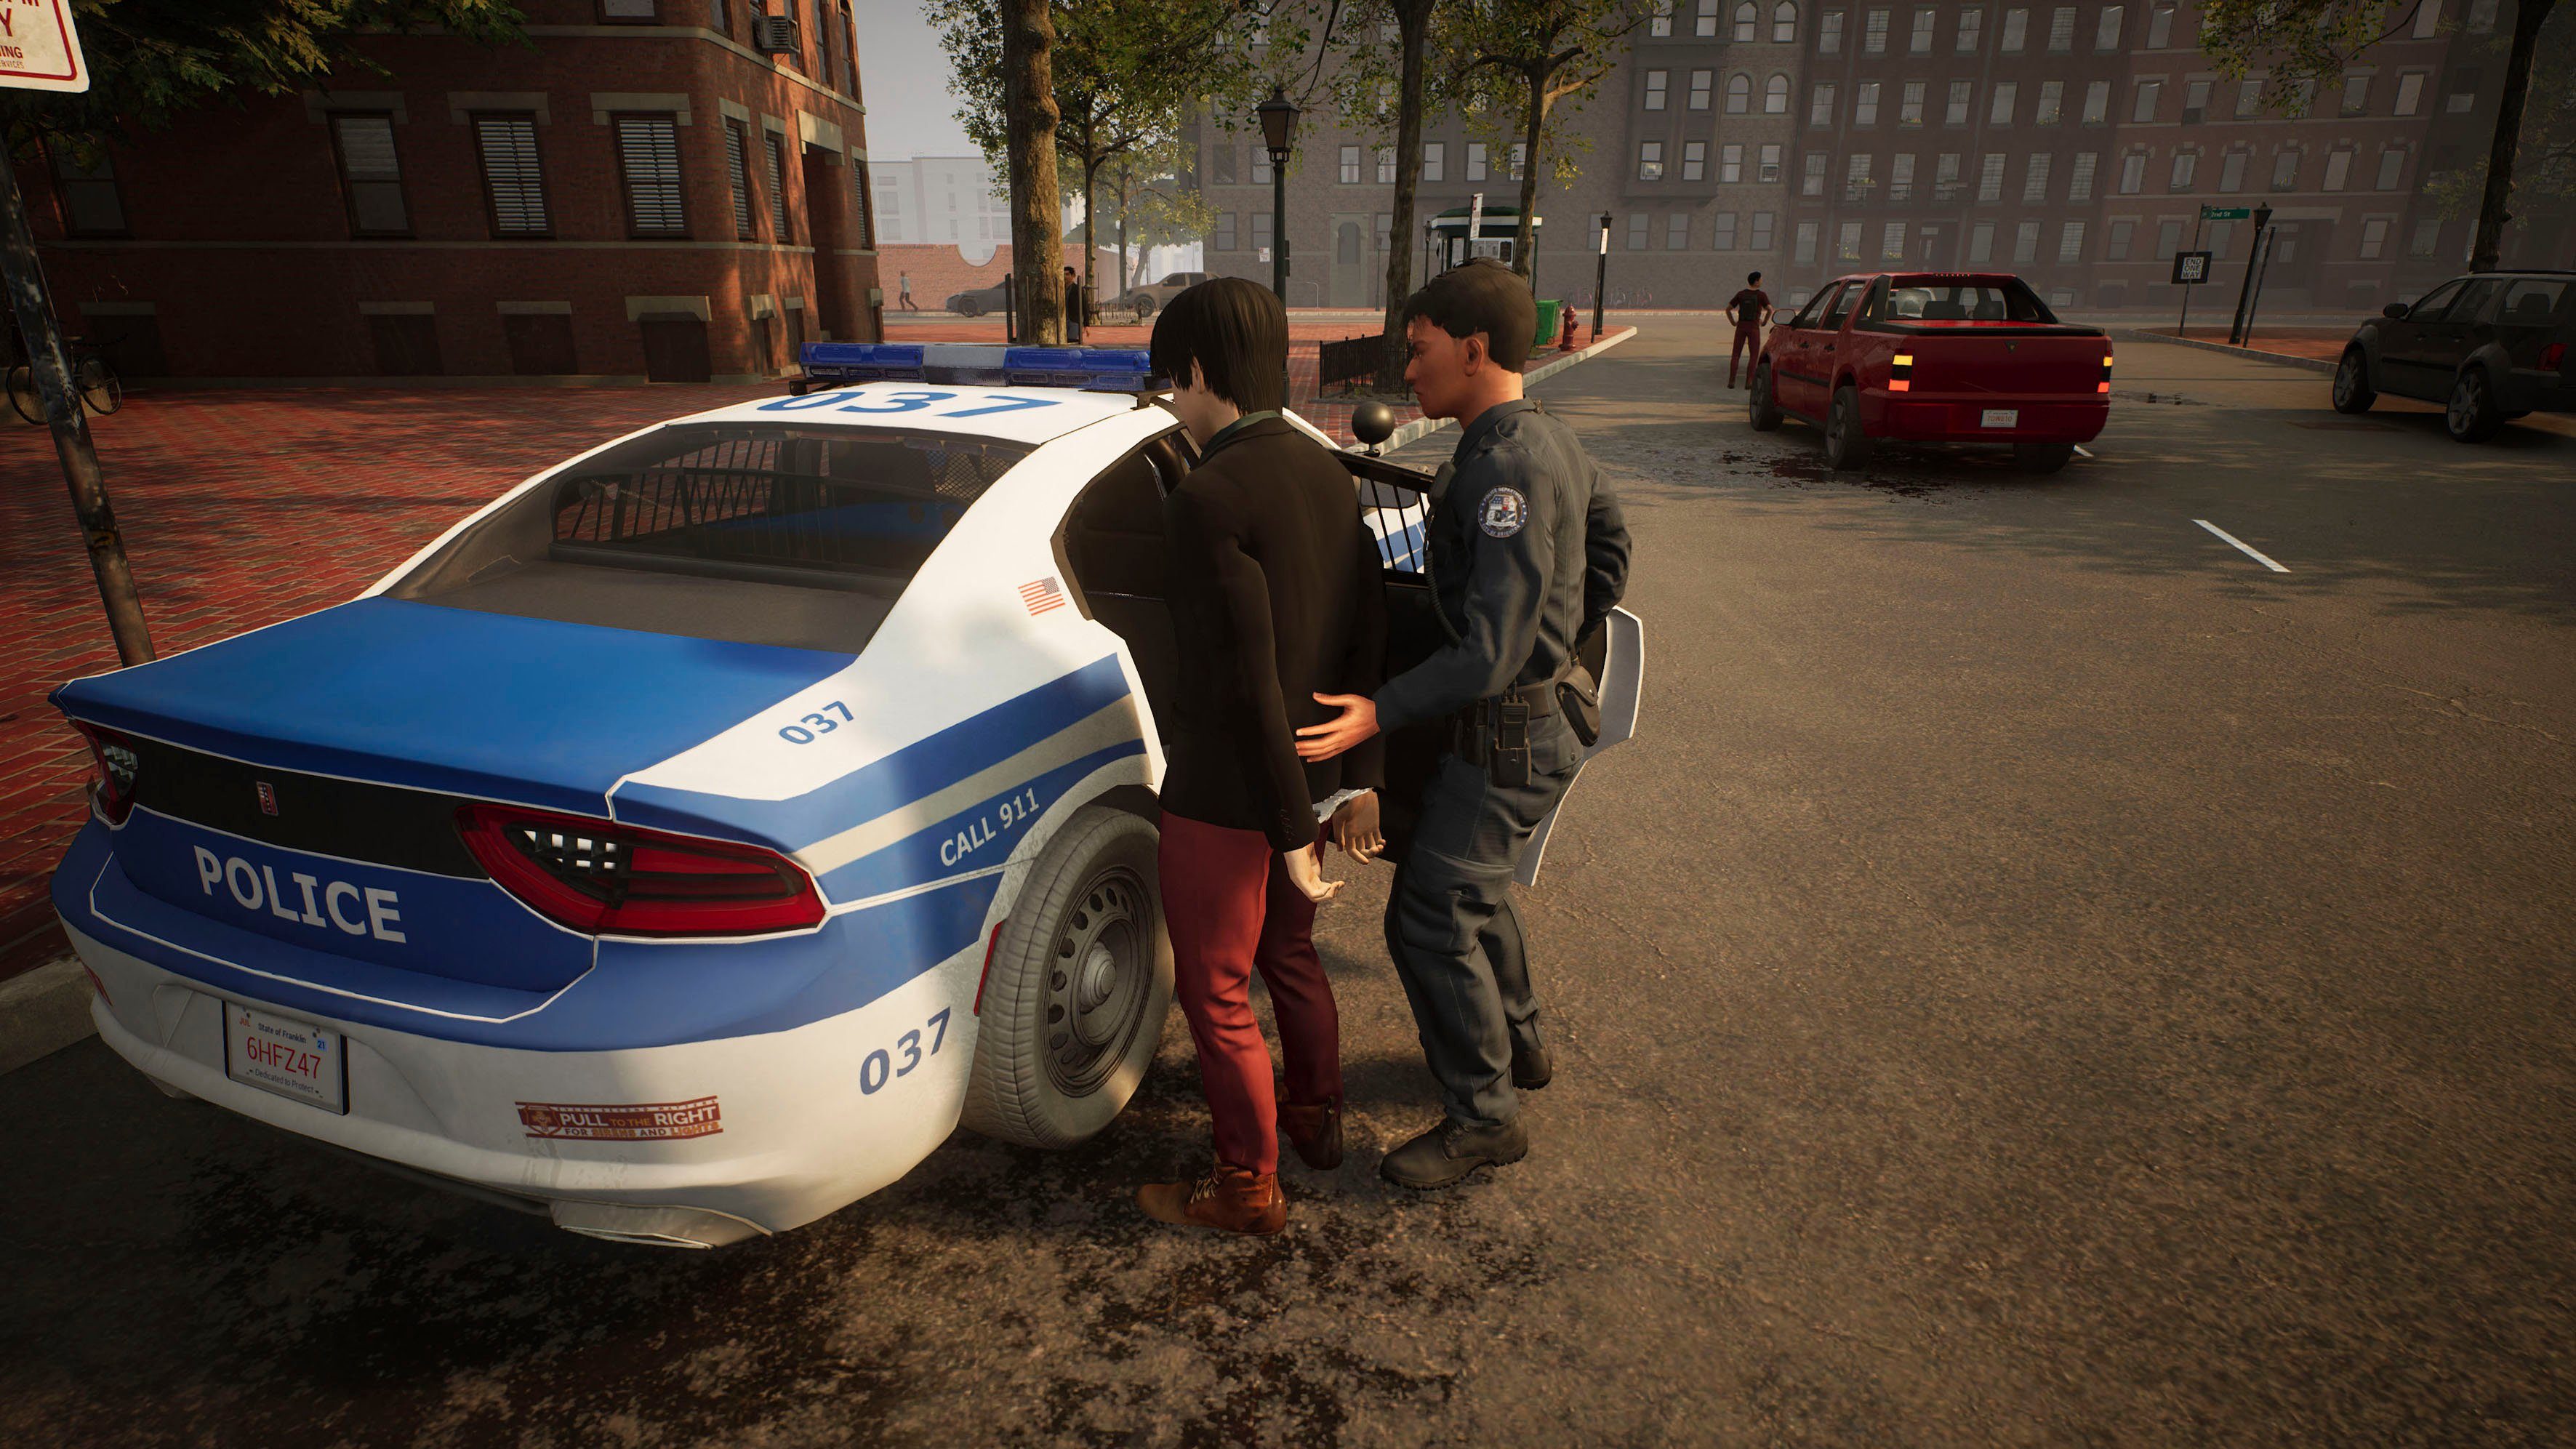 PlayStation Patrol 5 Simulator: Police Astragon Officers